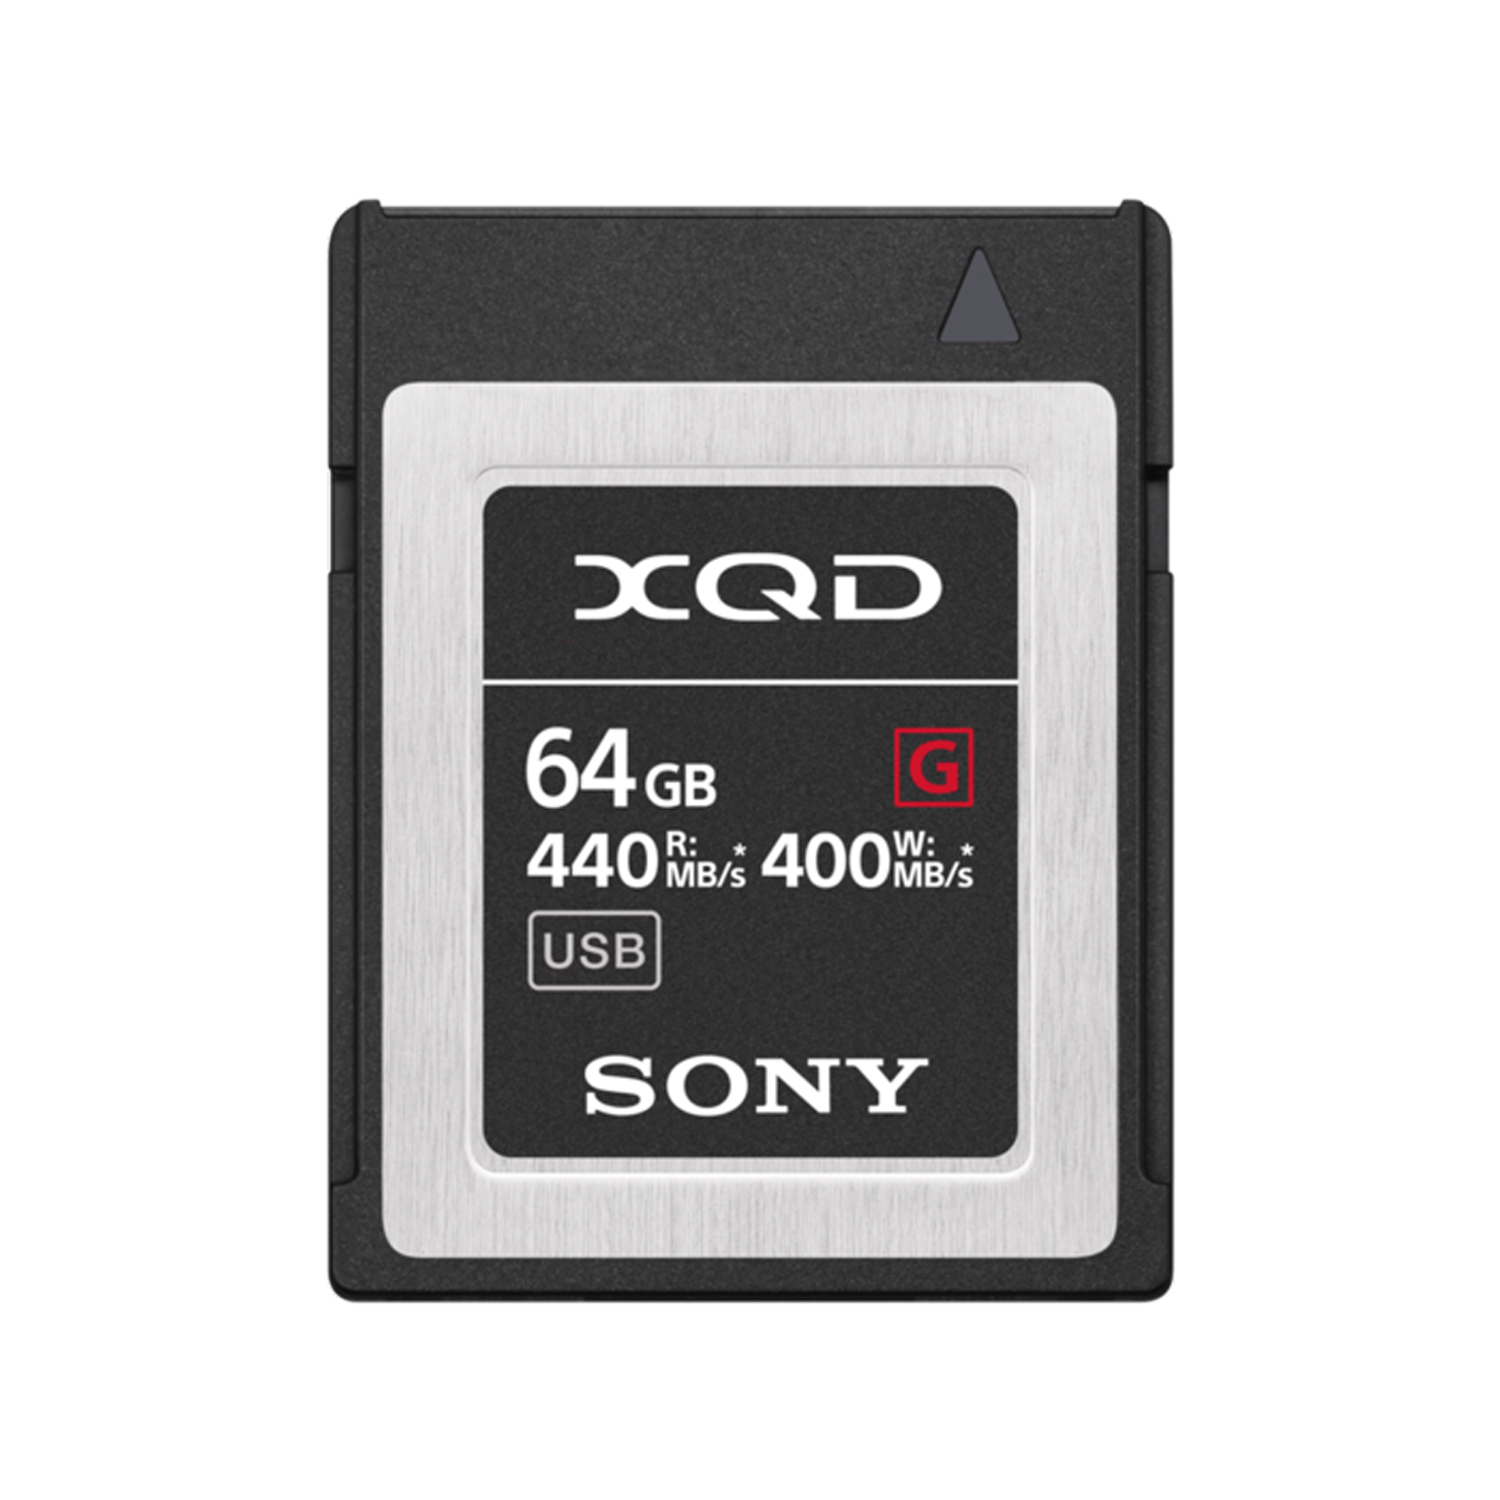 Sony QD-G64F